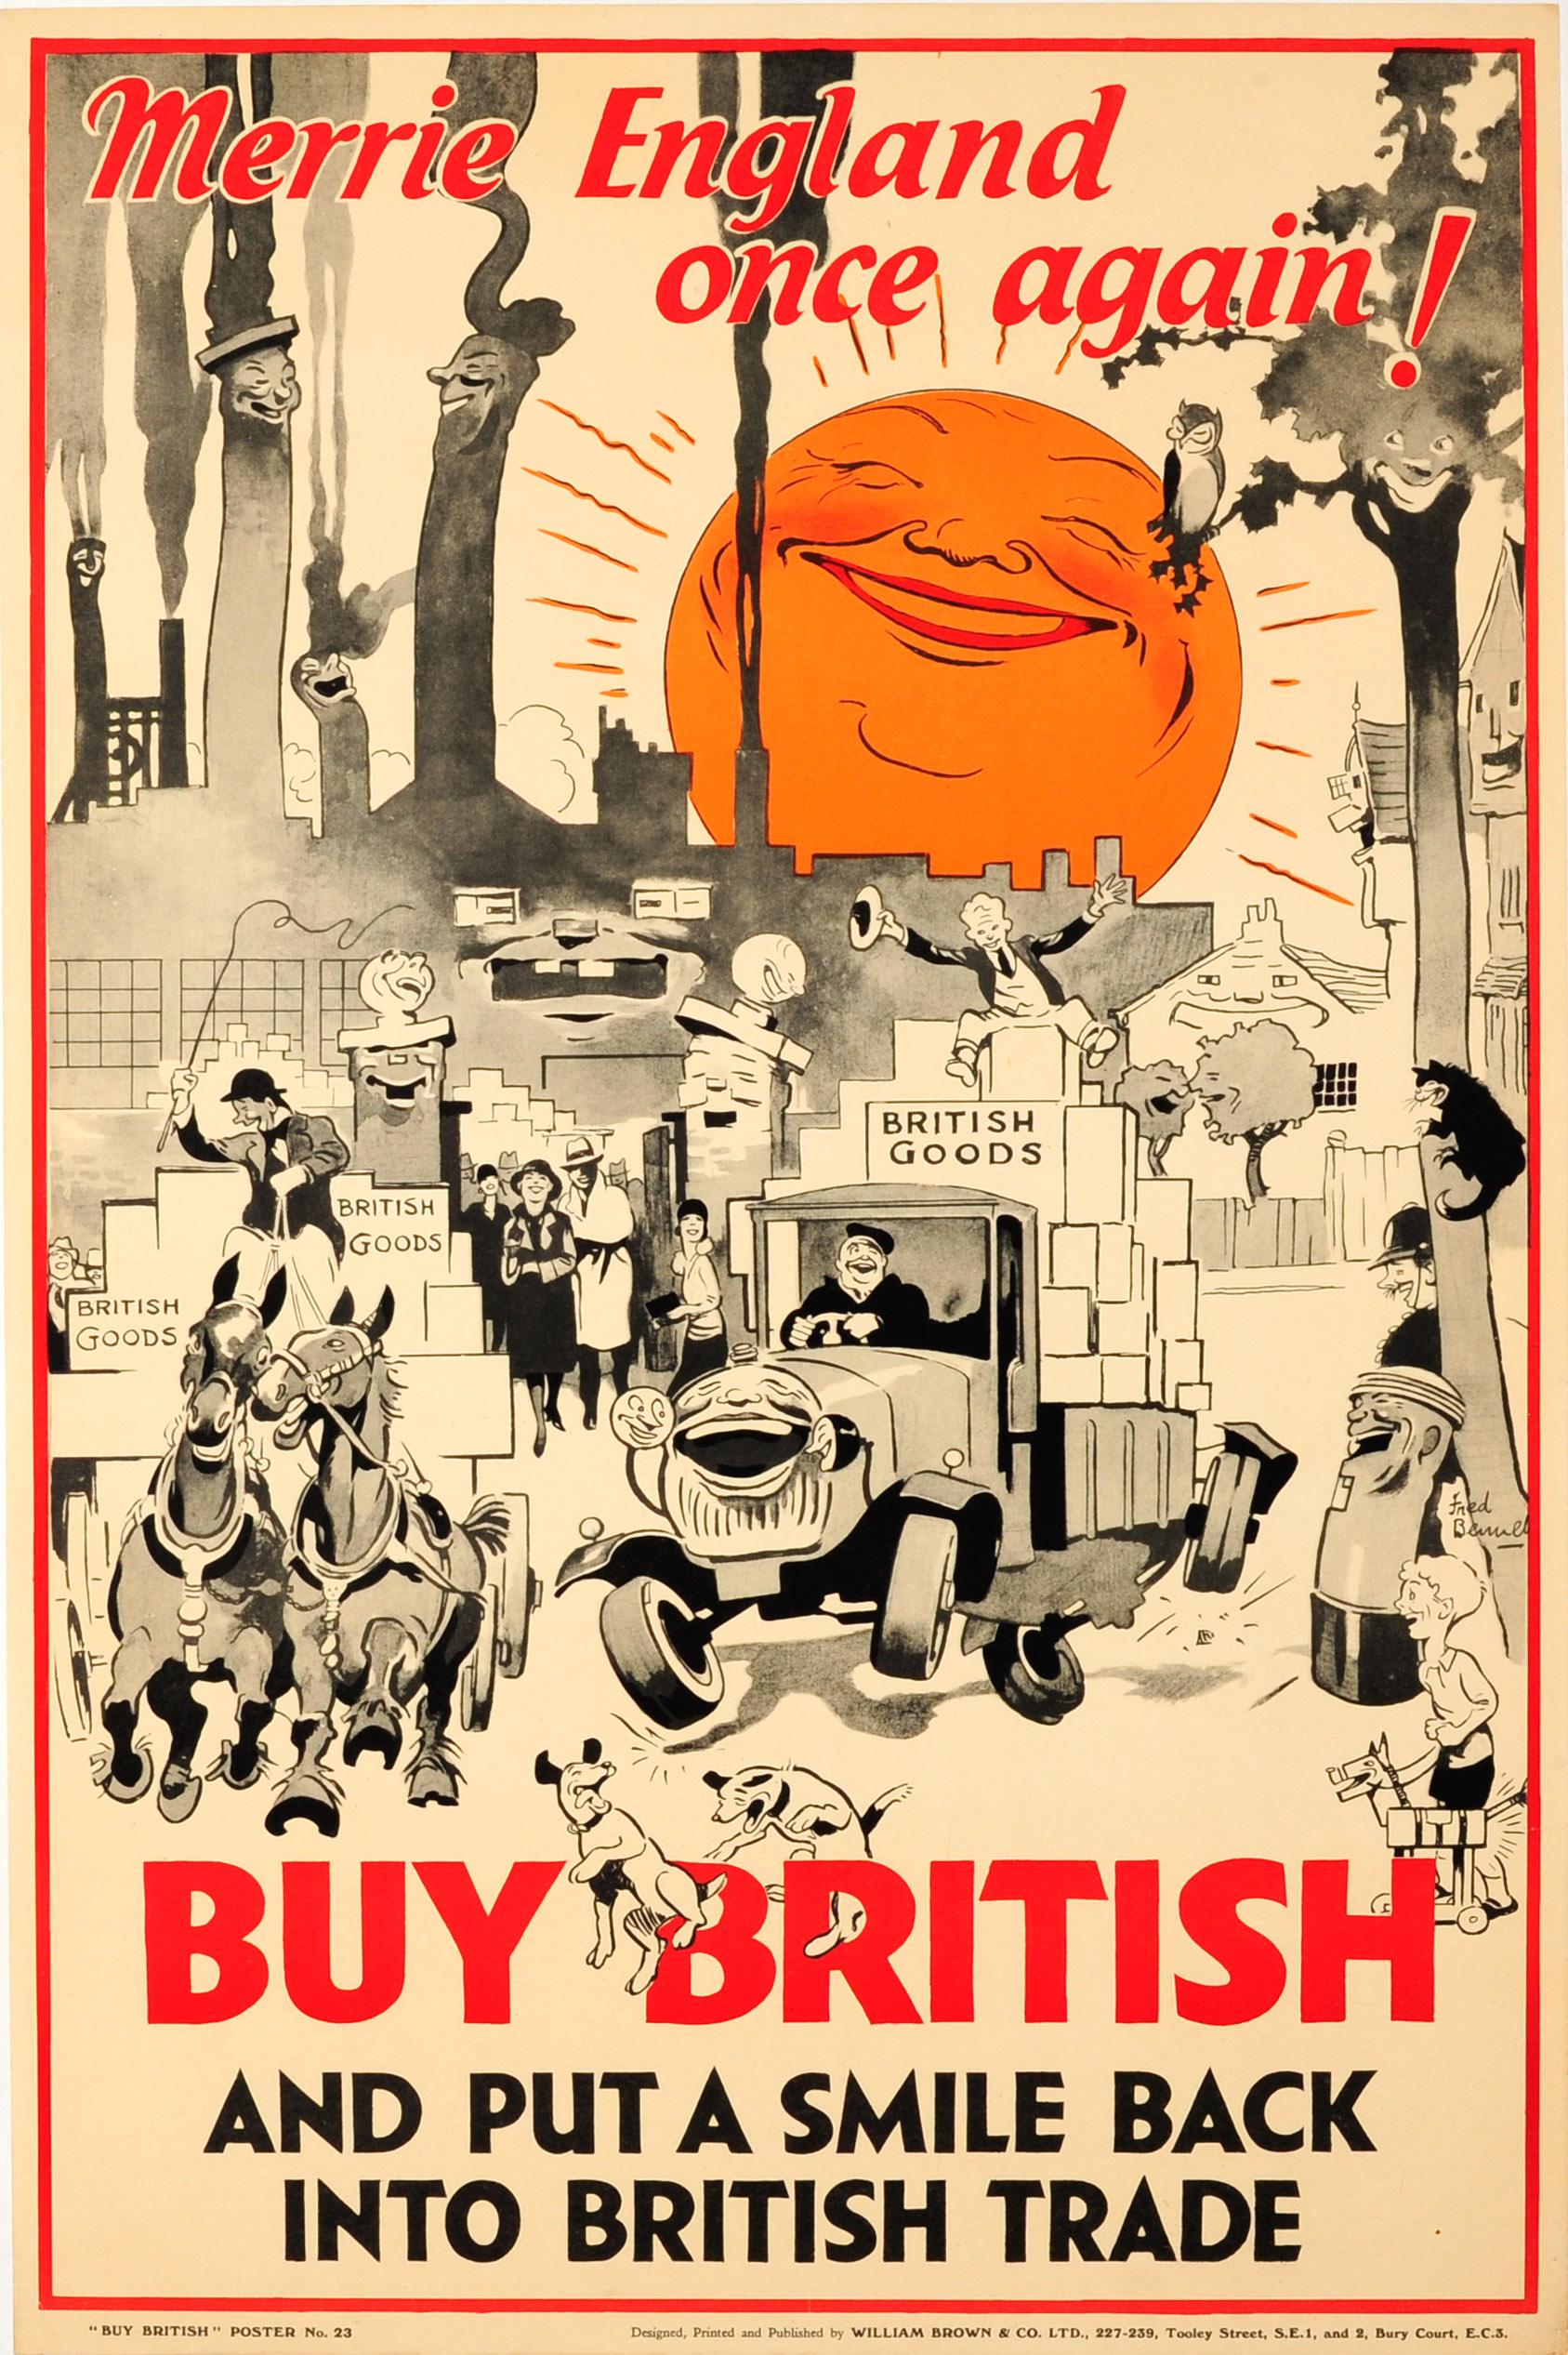 Unknown Print - Original Vintage Buy British Poster - Merrie England Once Again! - British Trade